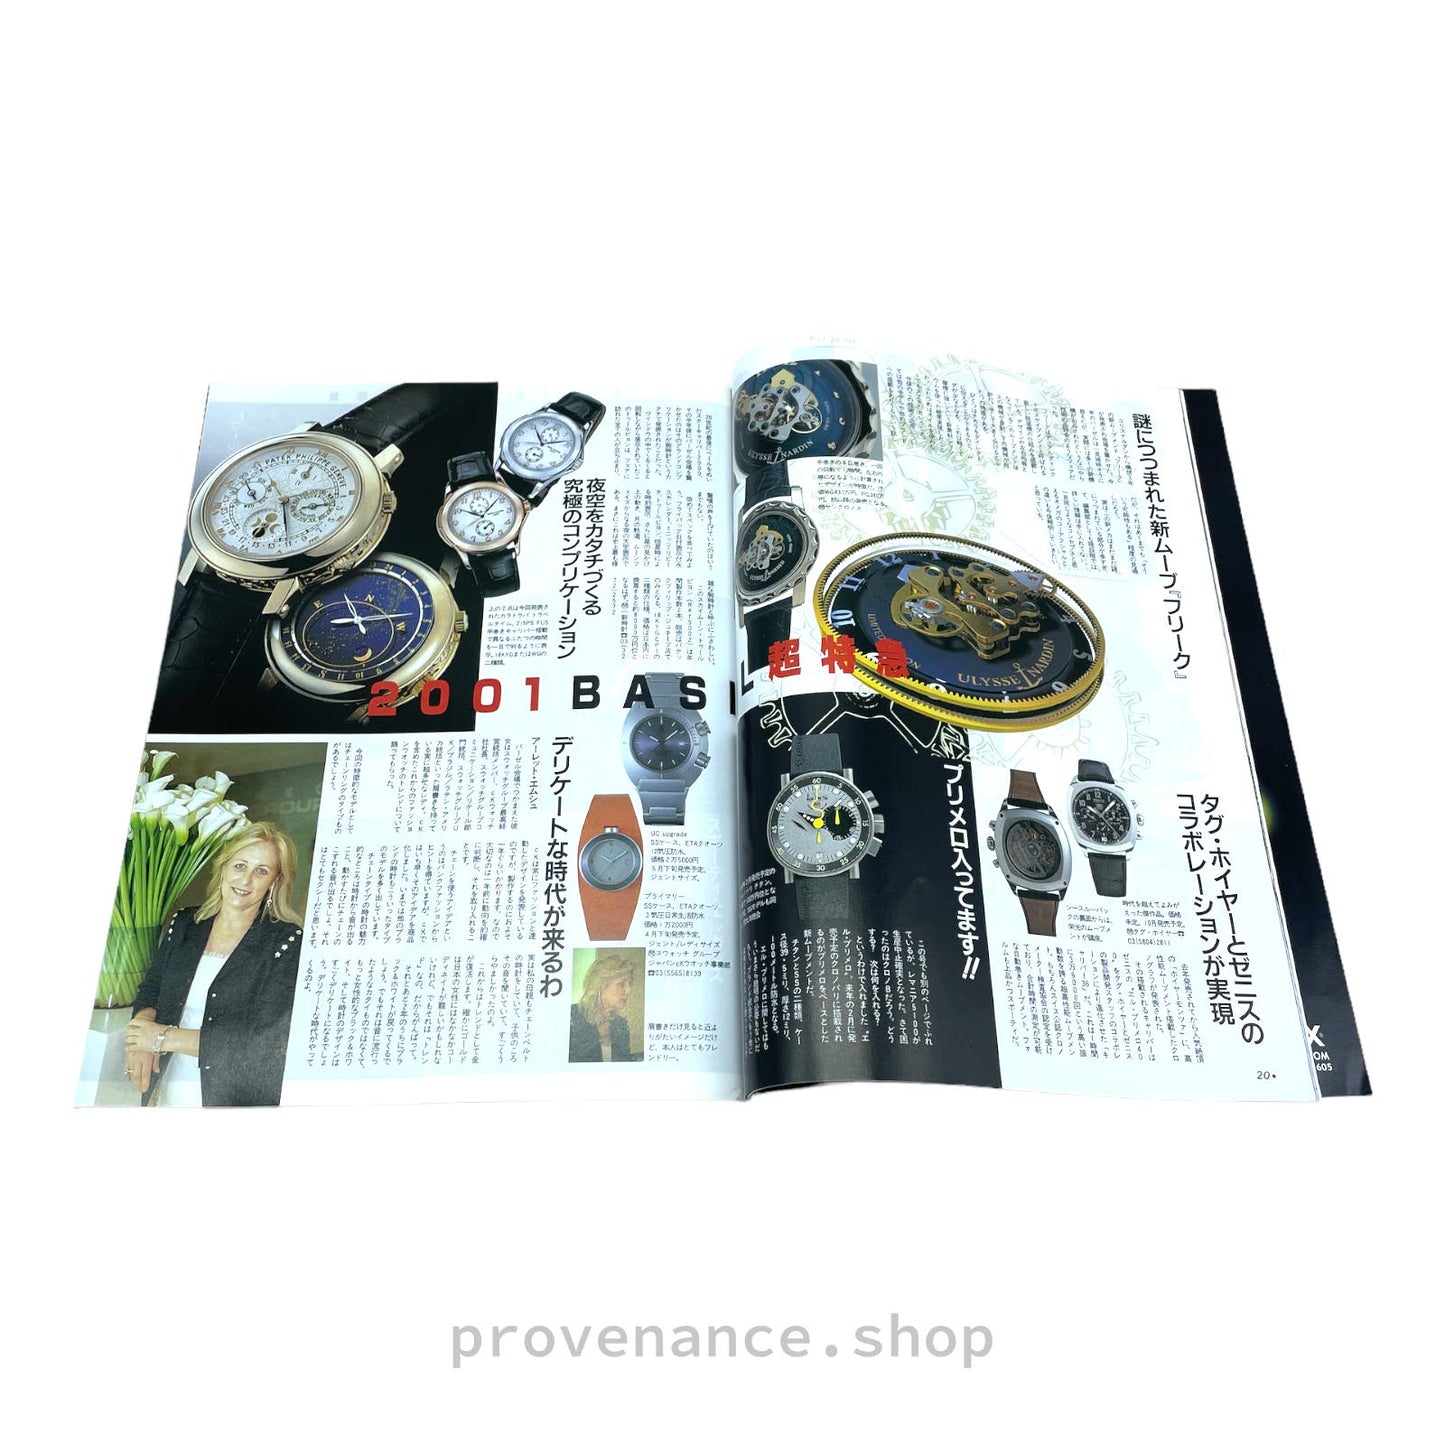 🔴 Rolex Japan Magazine - "Watch @gogo"